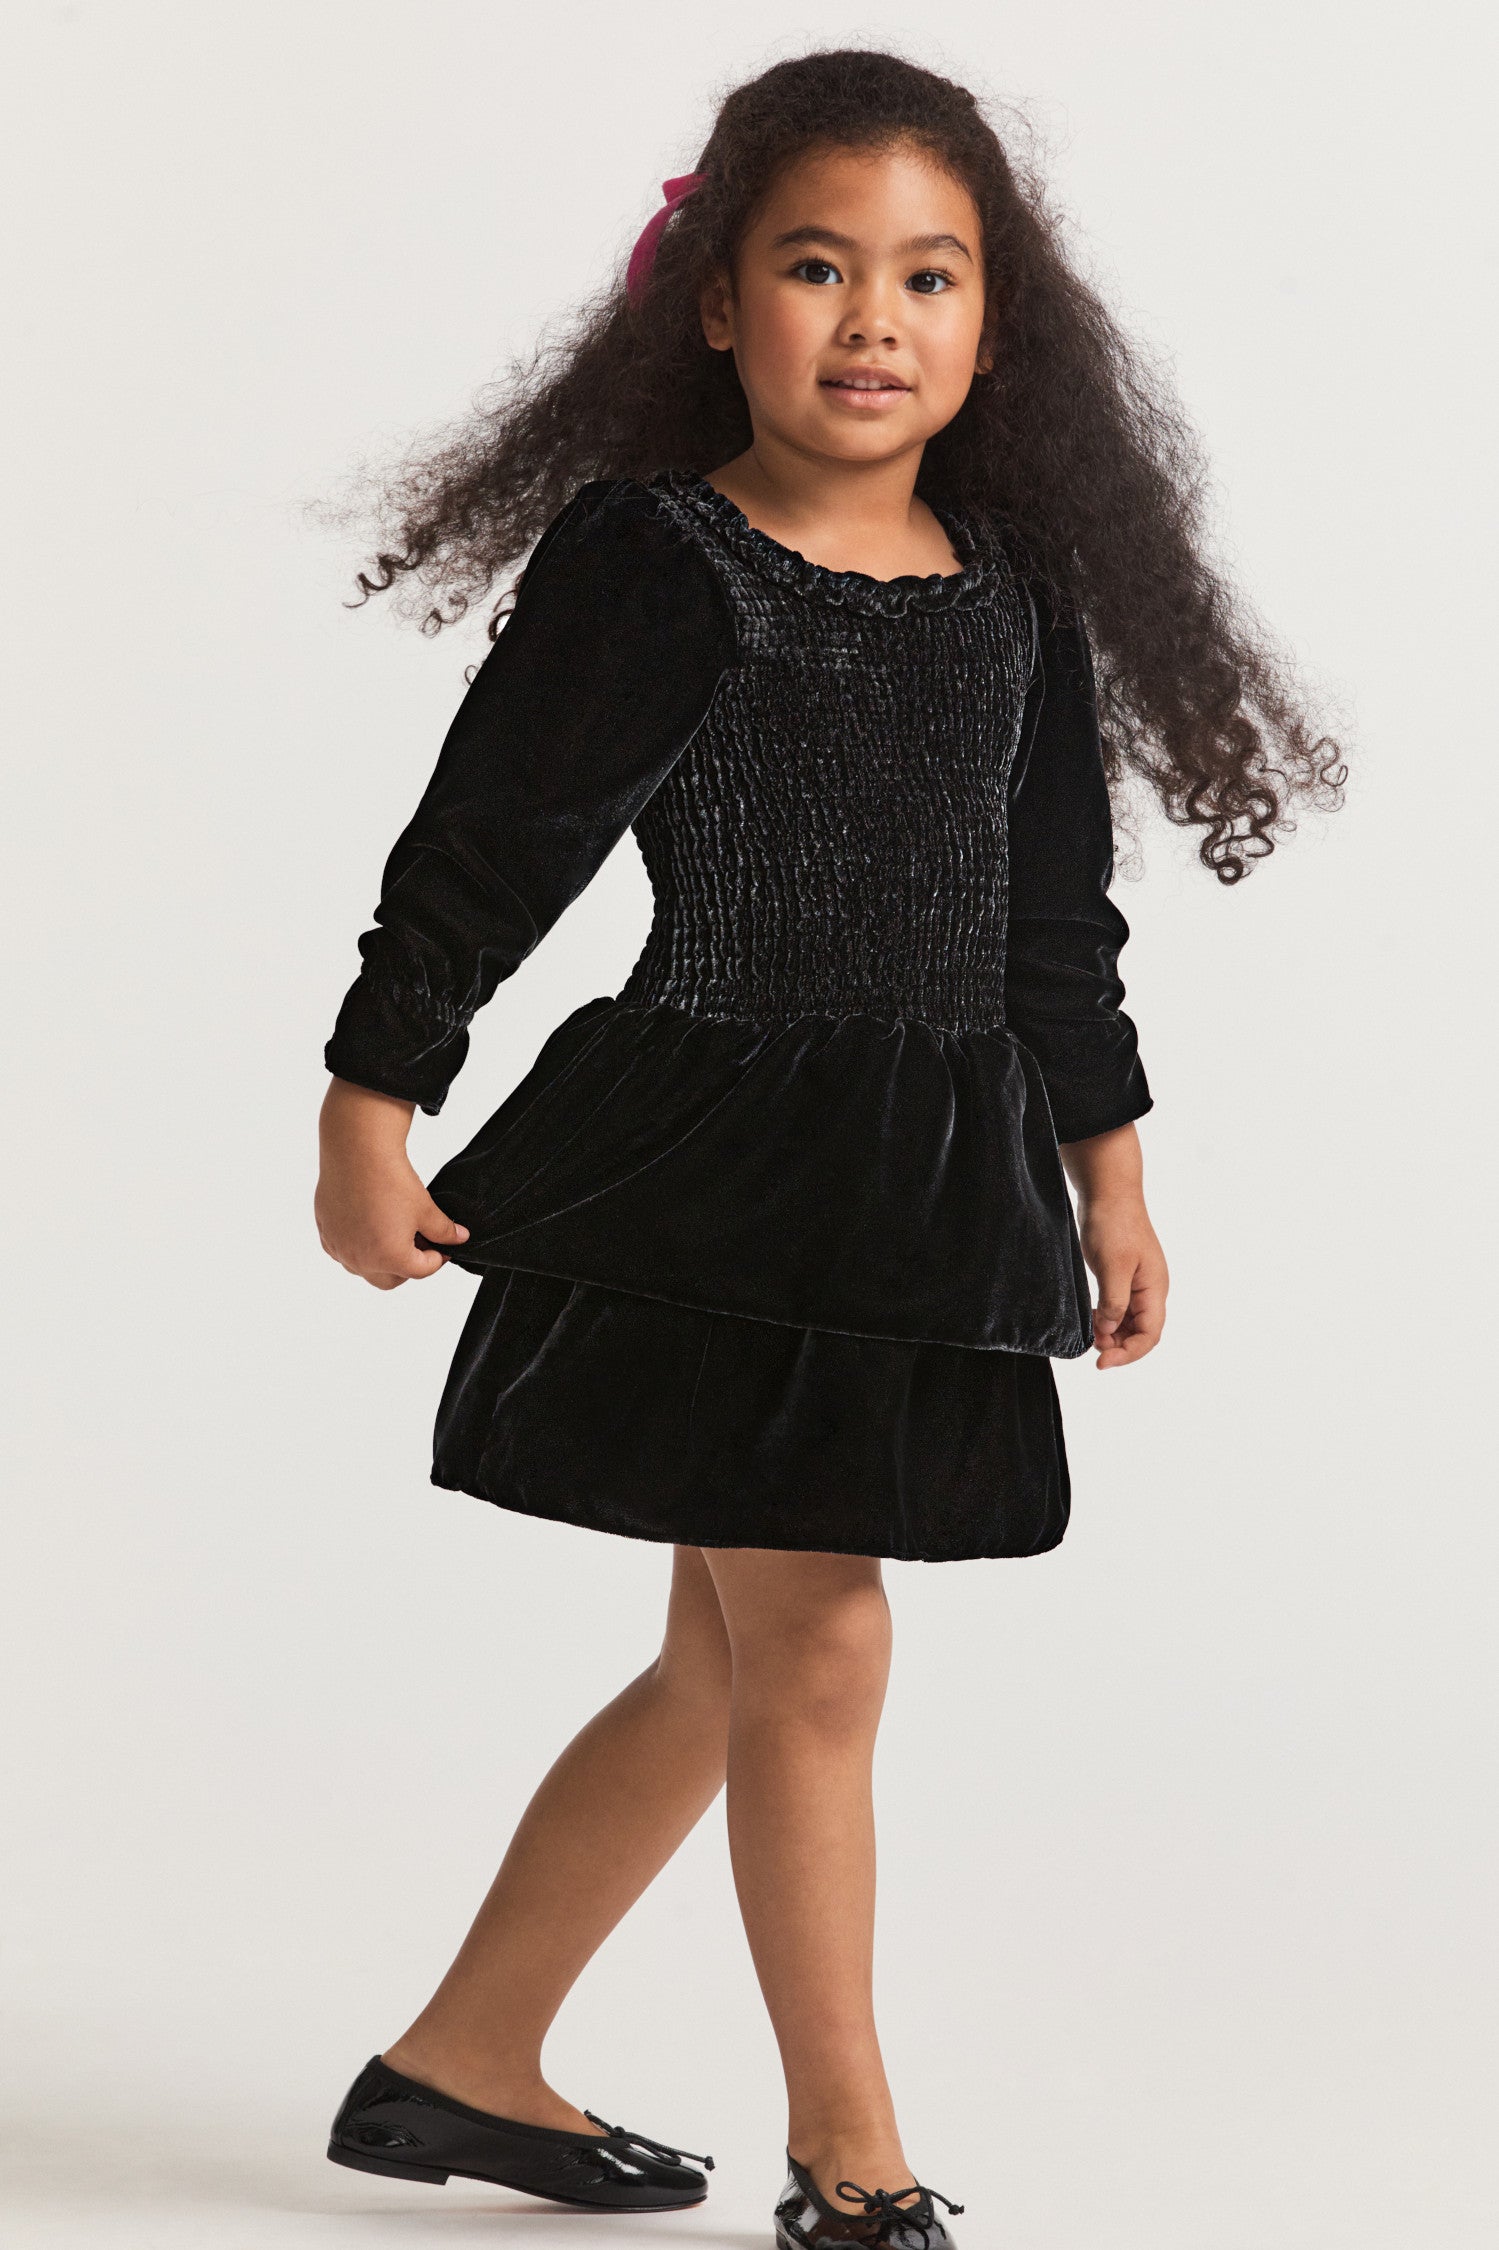 Girls mini black dress, long-sleeves with two layer ruffle skirt.